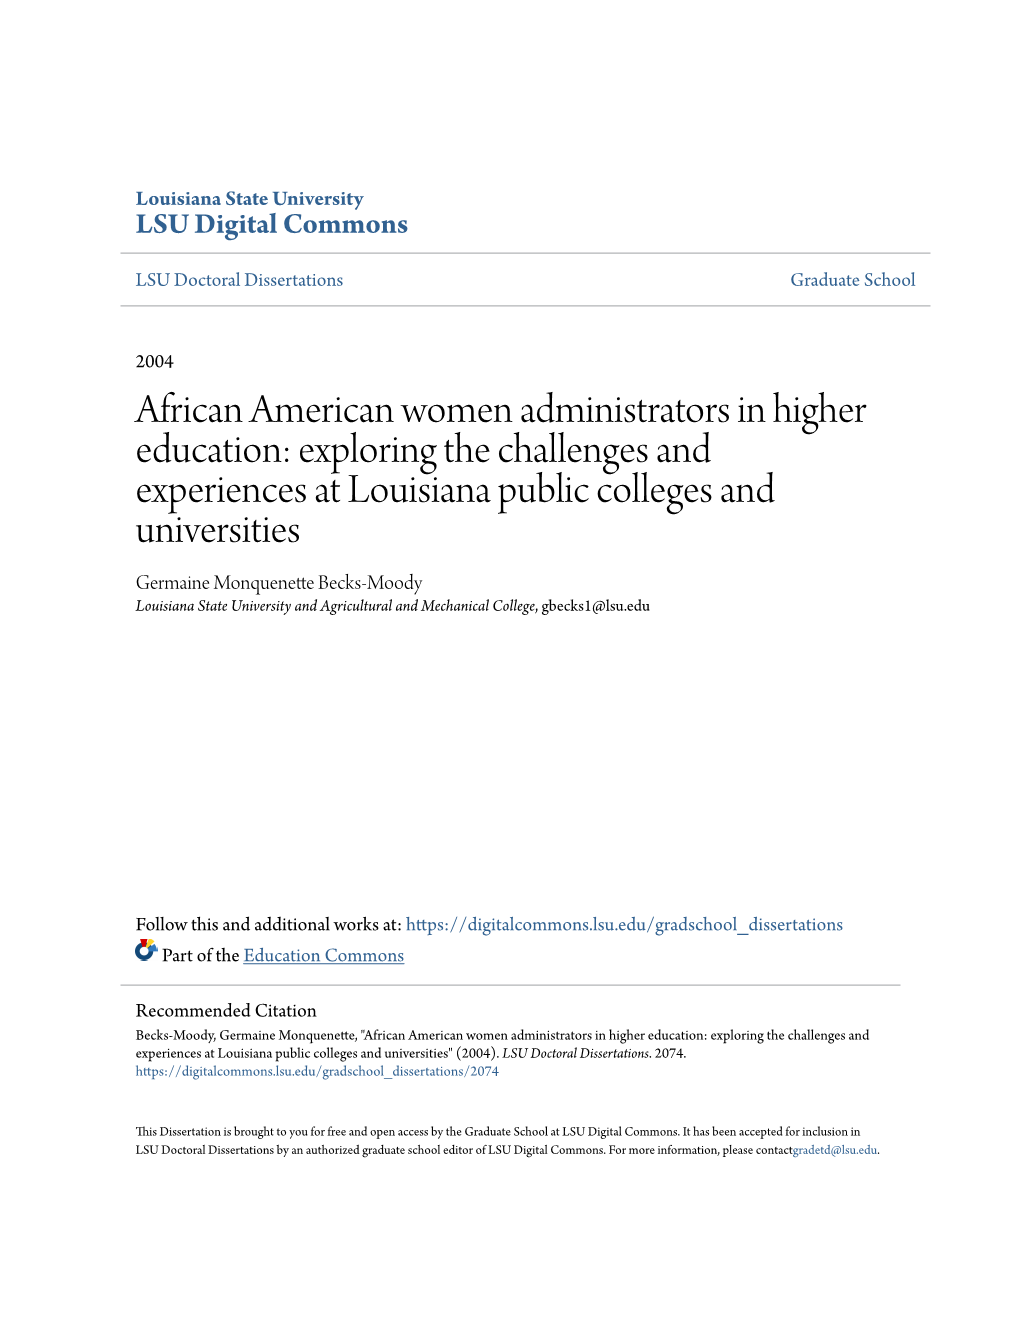 African American Women Administrators in Higher Education